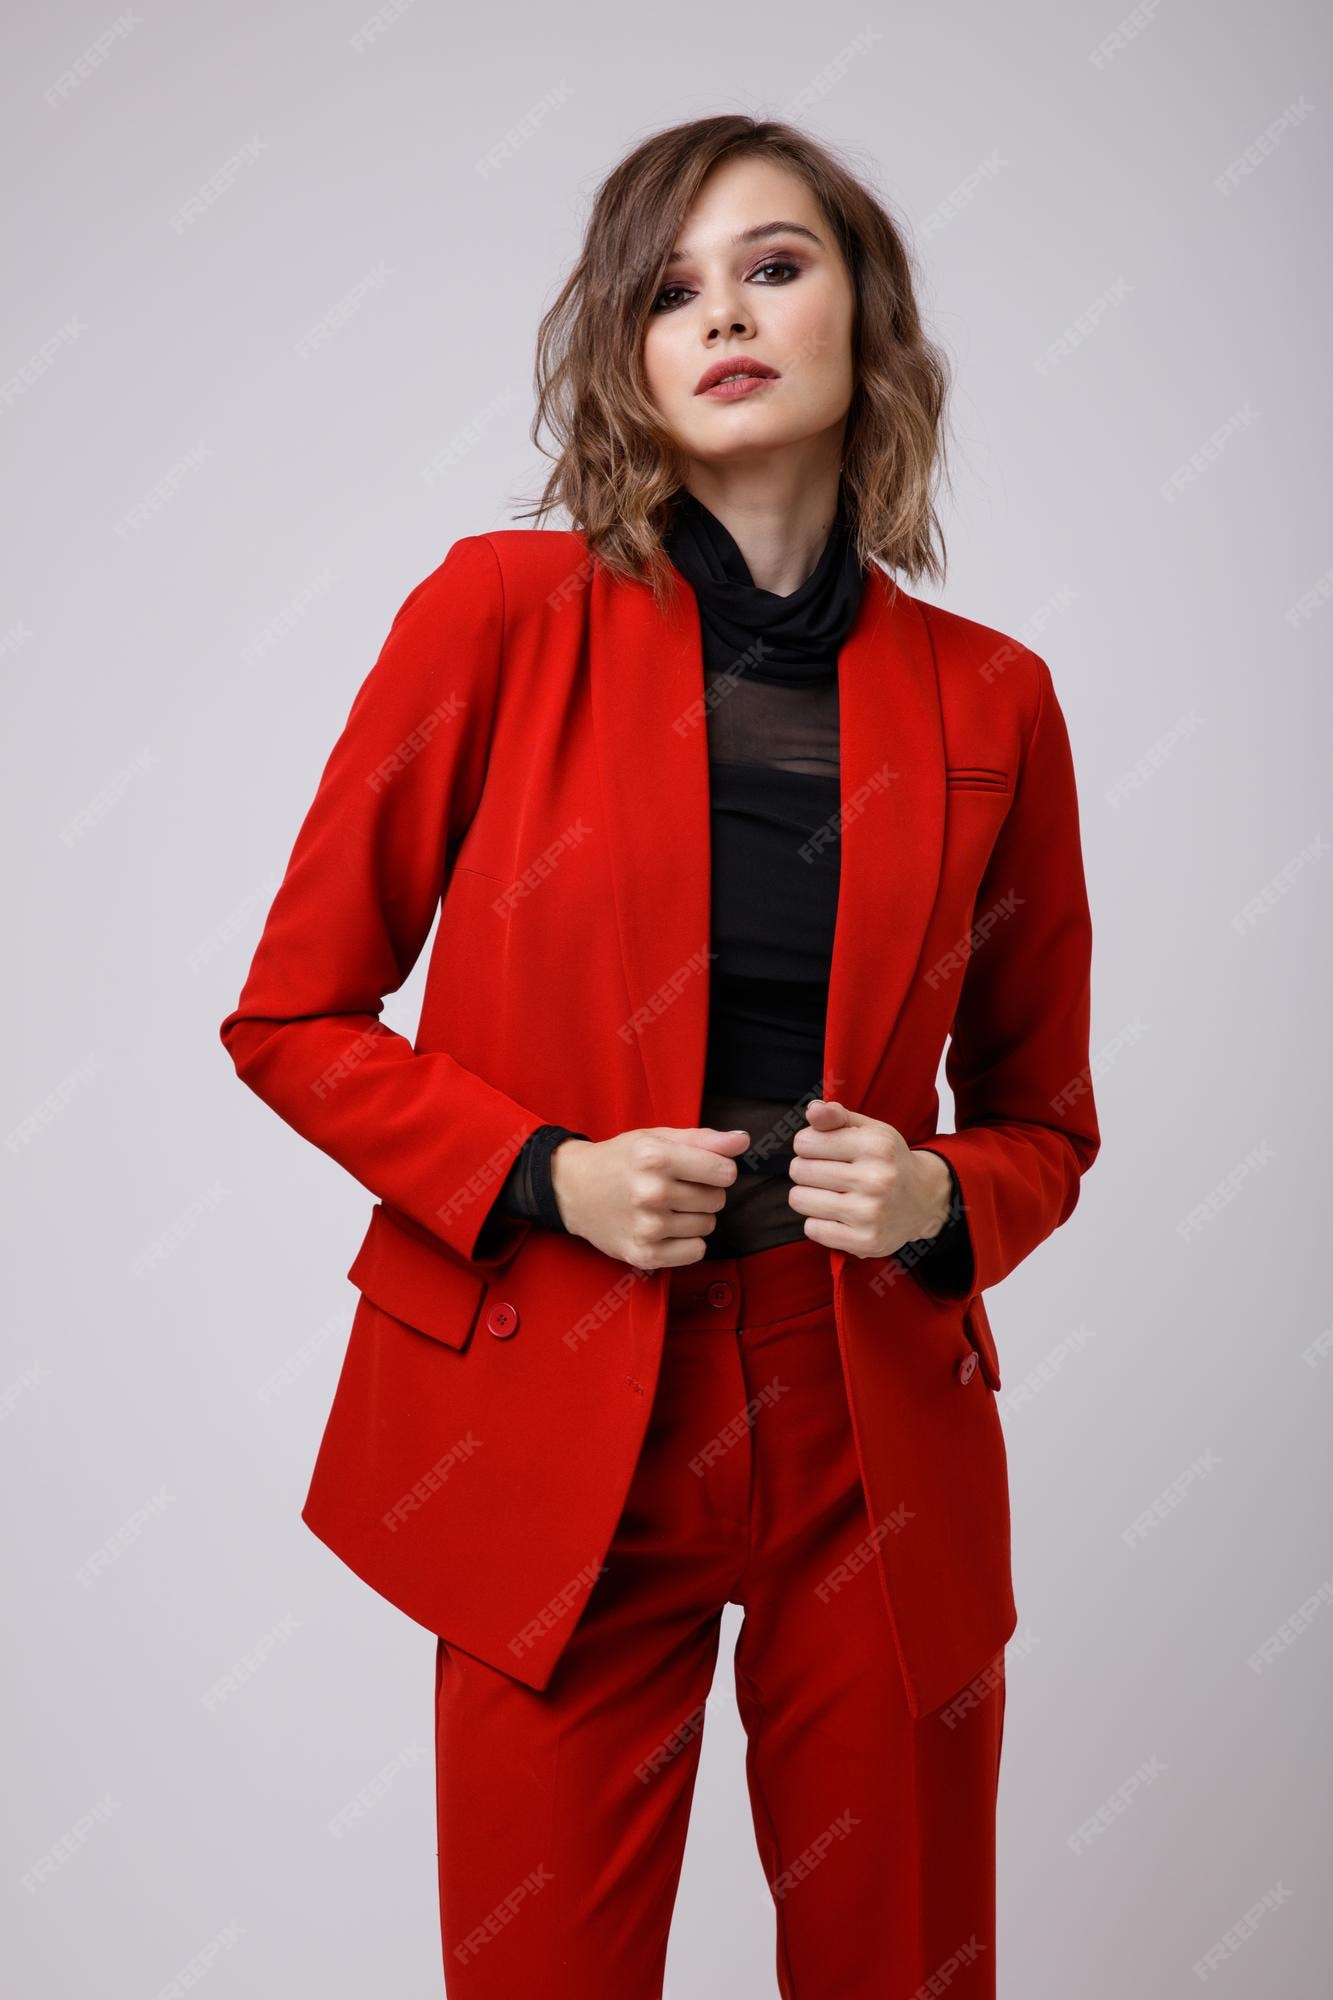 Elegante mujer joven en un bonito traje rojo chaqueta pantalones blusa negra sobre fondo blanco. | Foto Premium